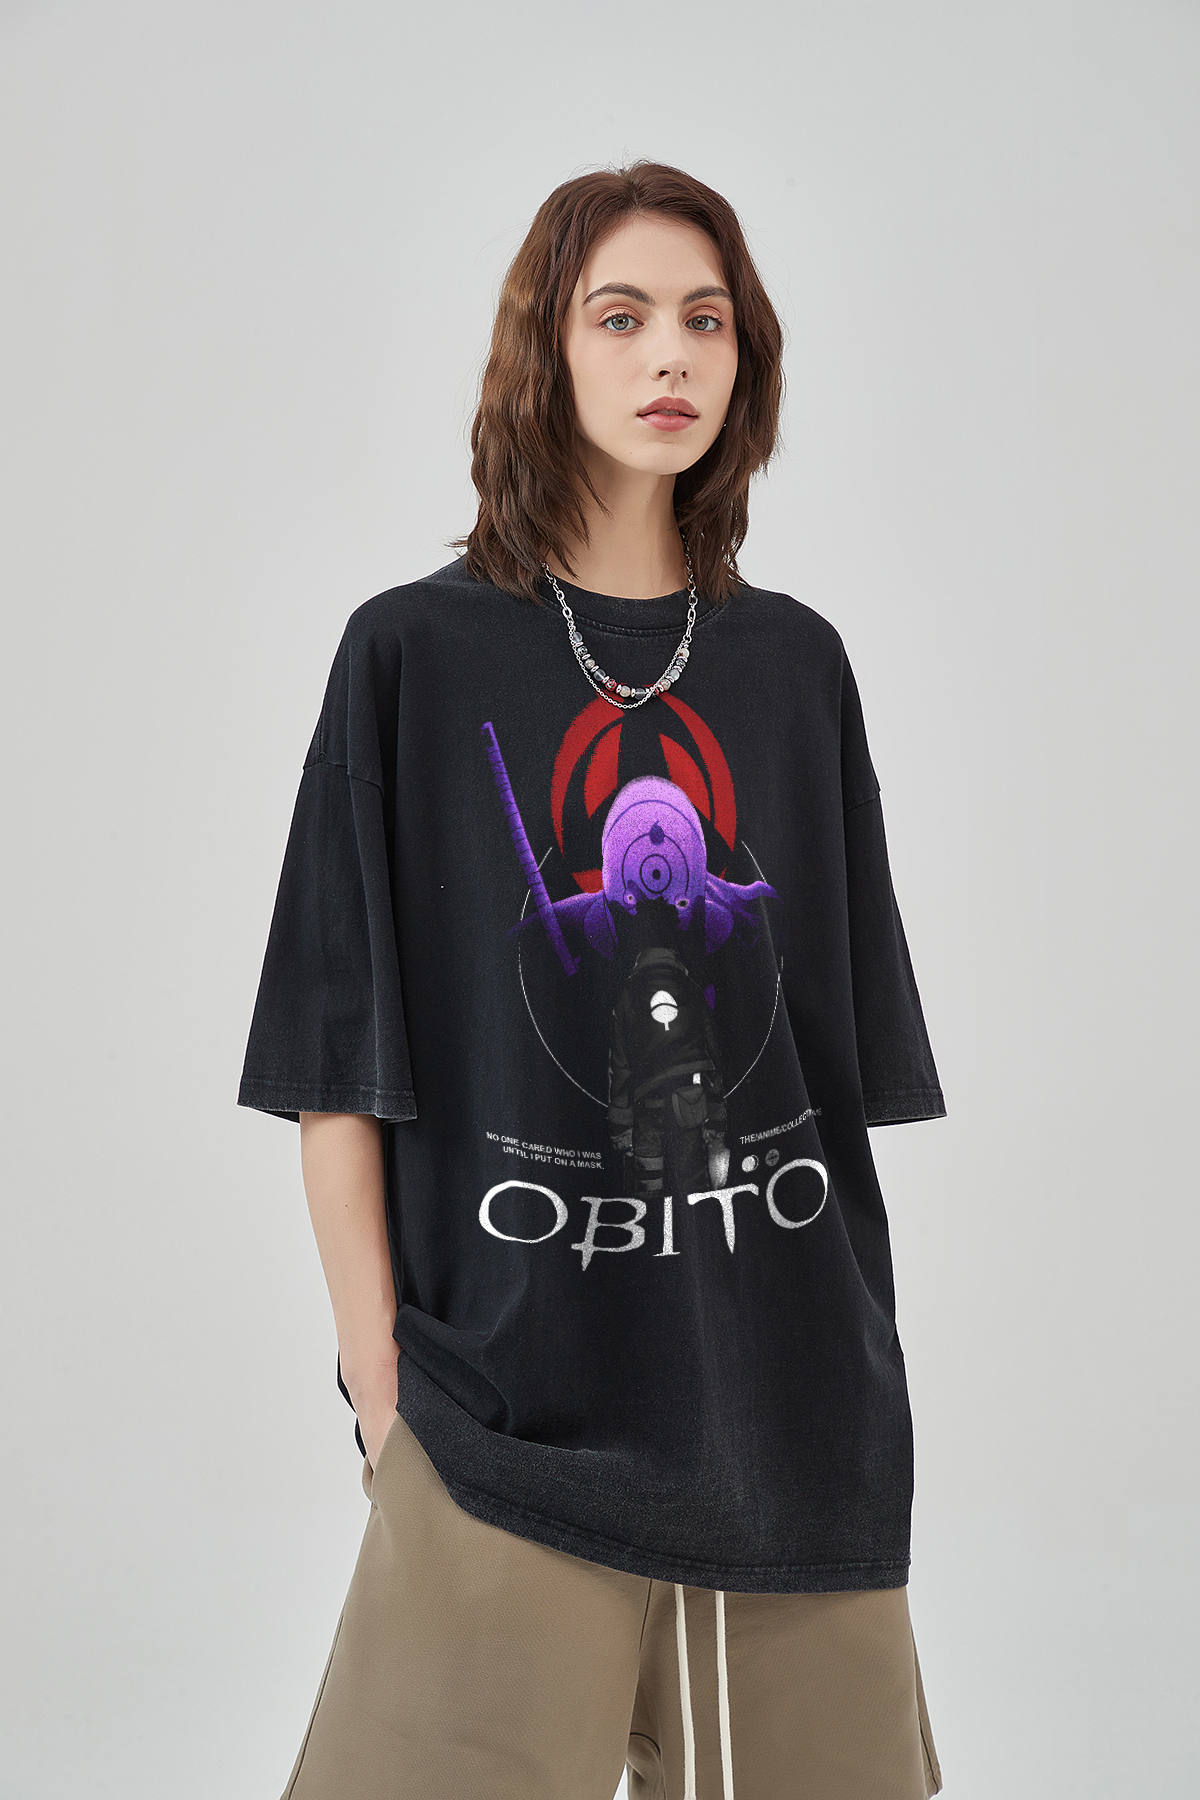 Obito Vintage Oversized T-Shirt | Naruto Shippuden